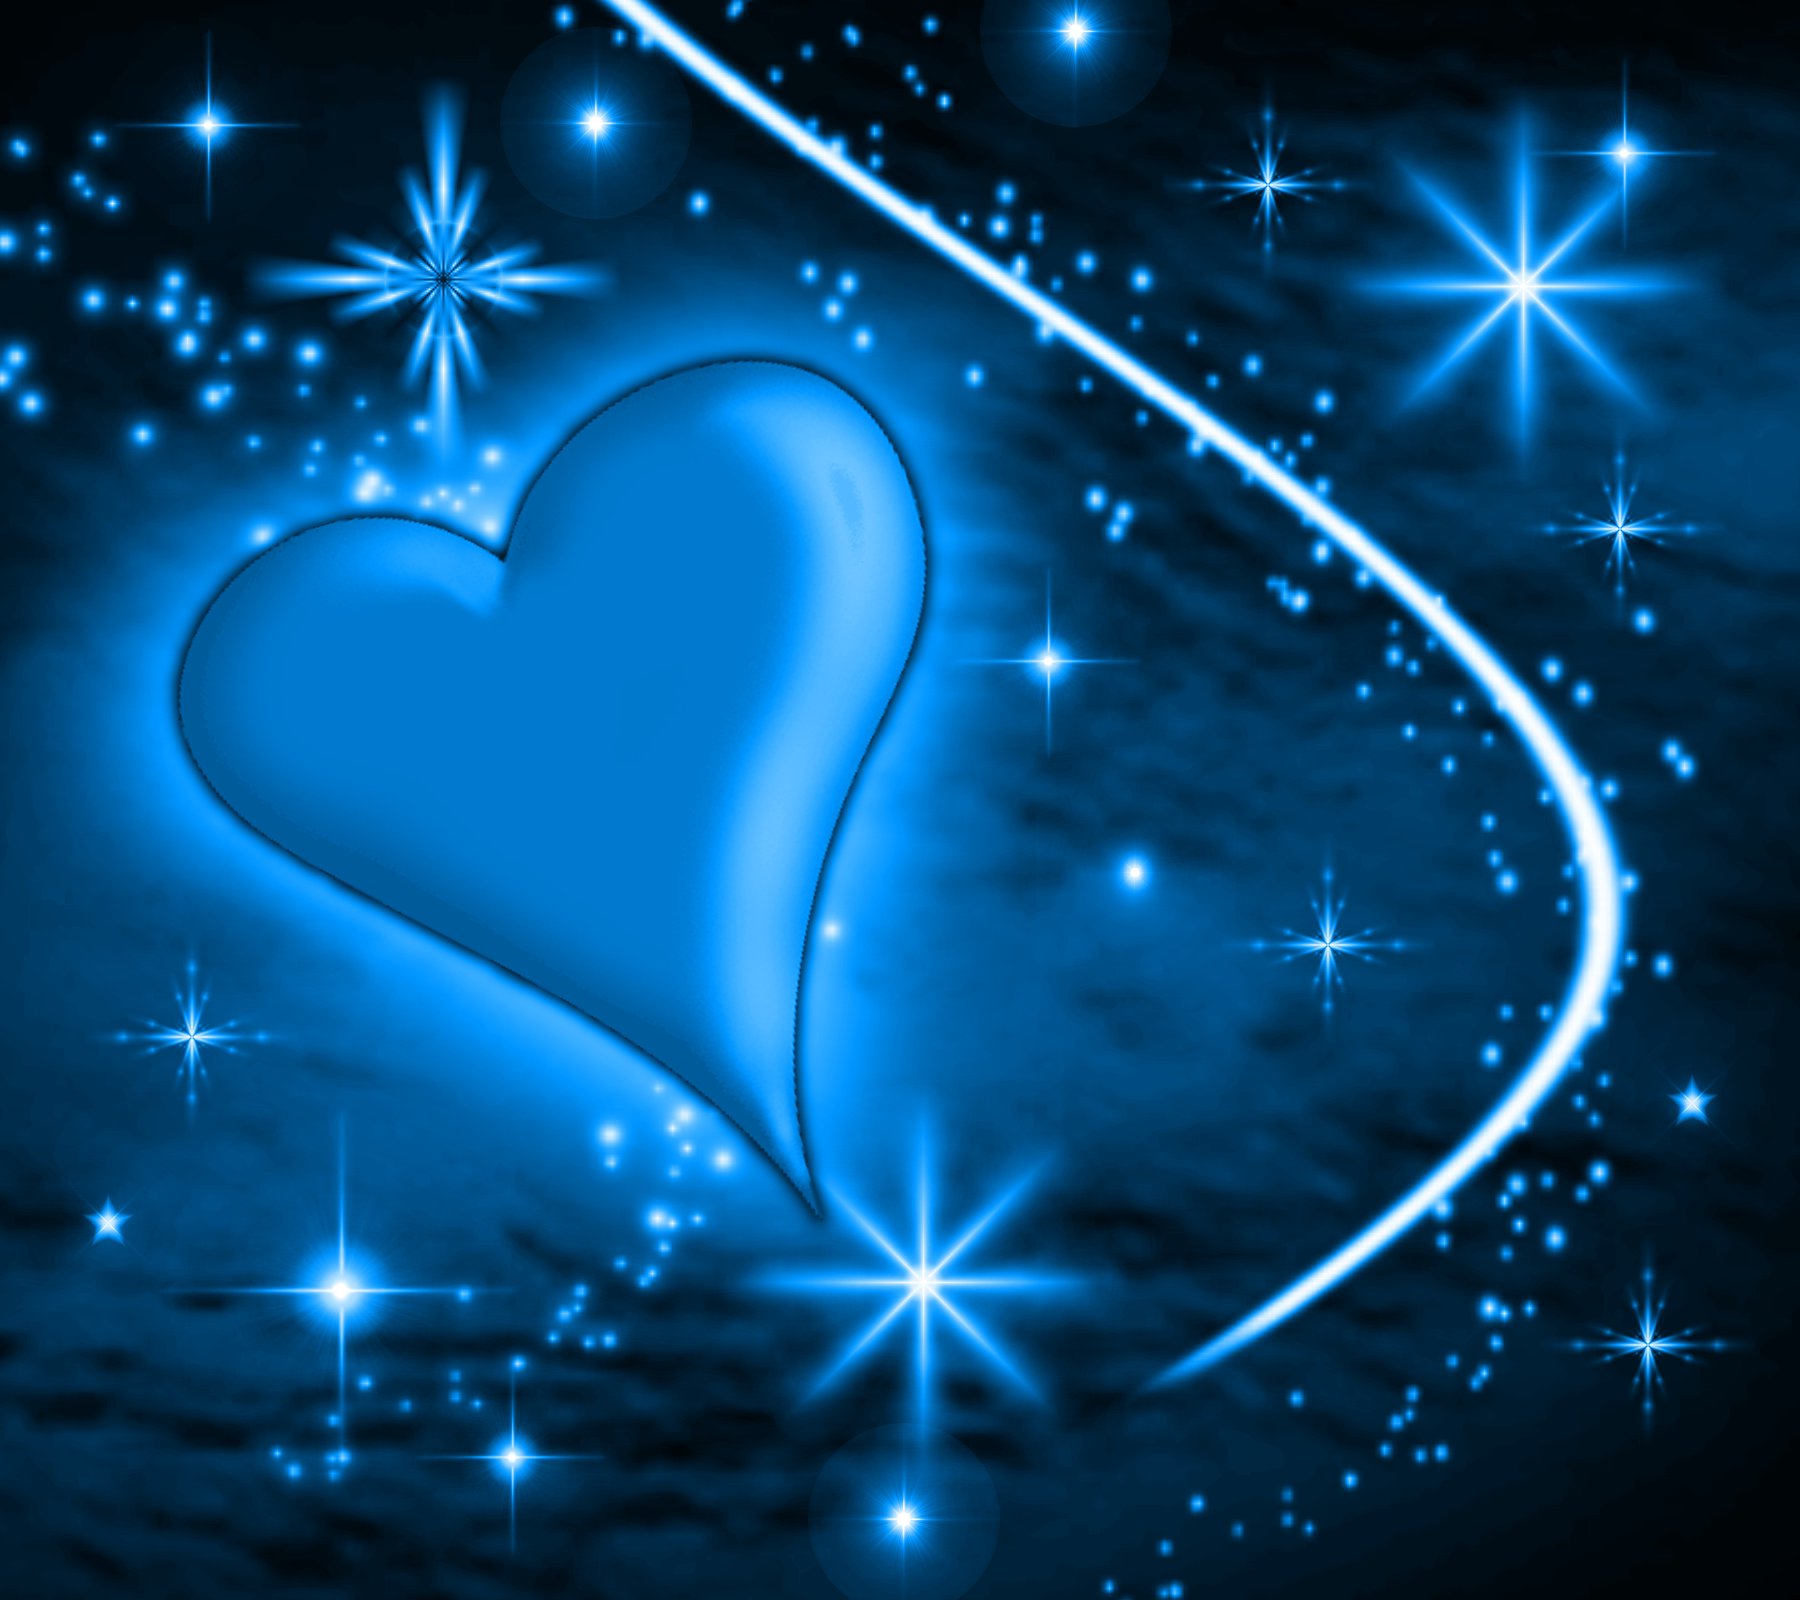 Sky Blue Heart With Plasma Stars Background 1800x1600 Background Image ...